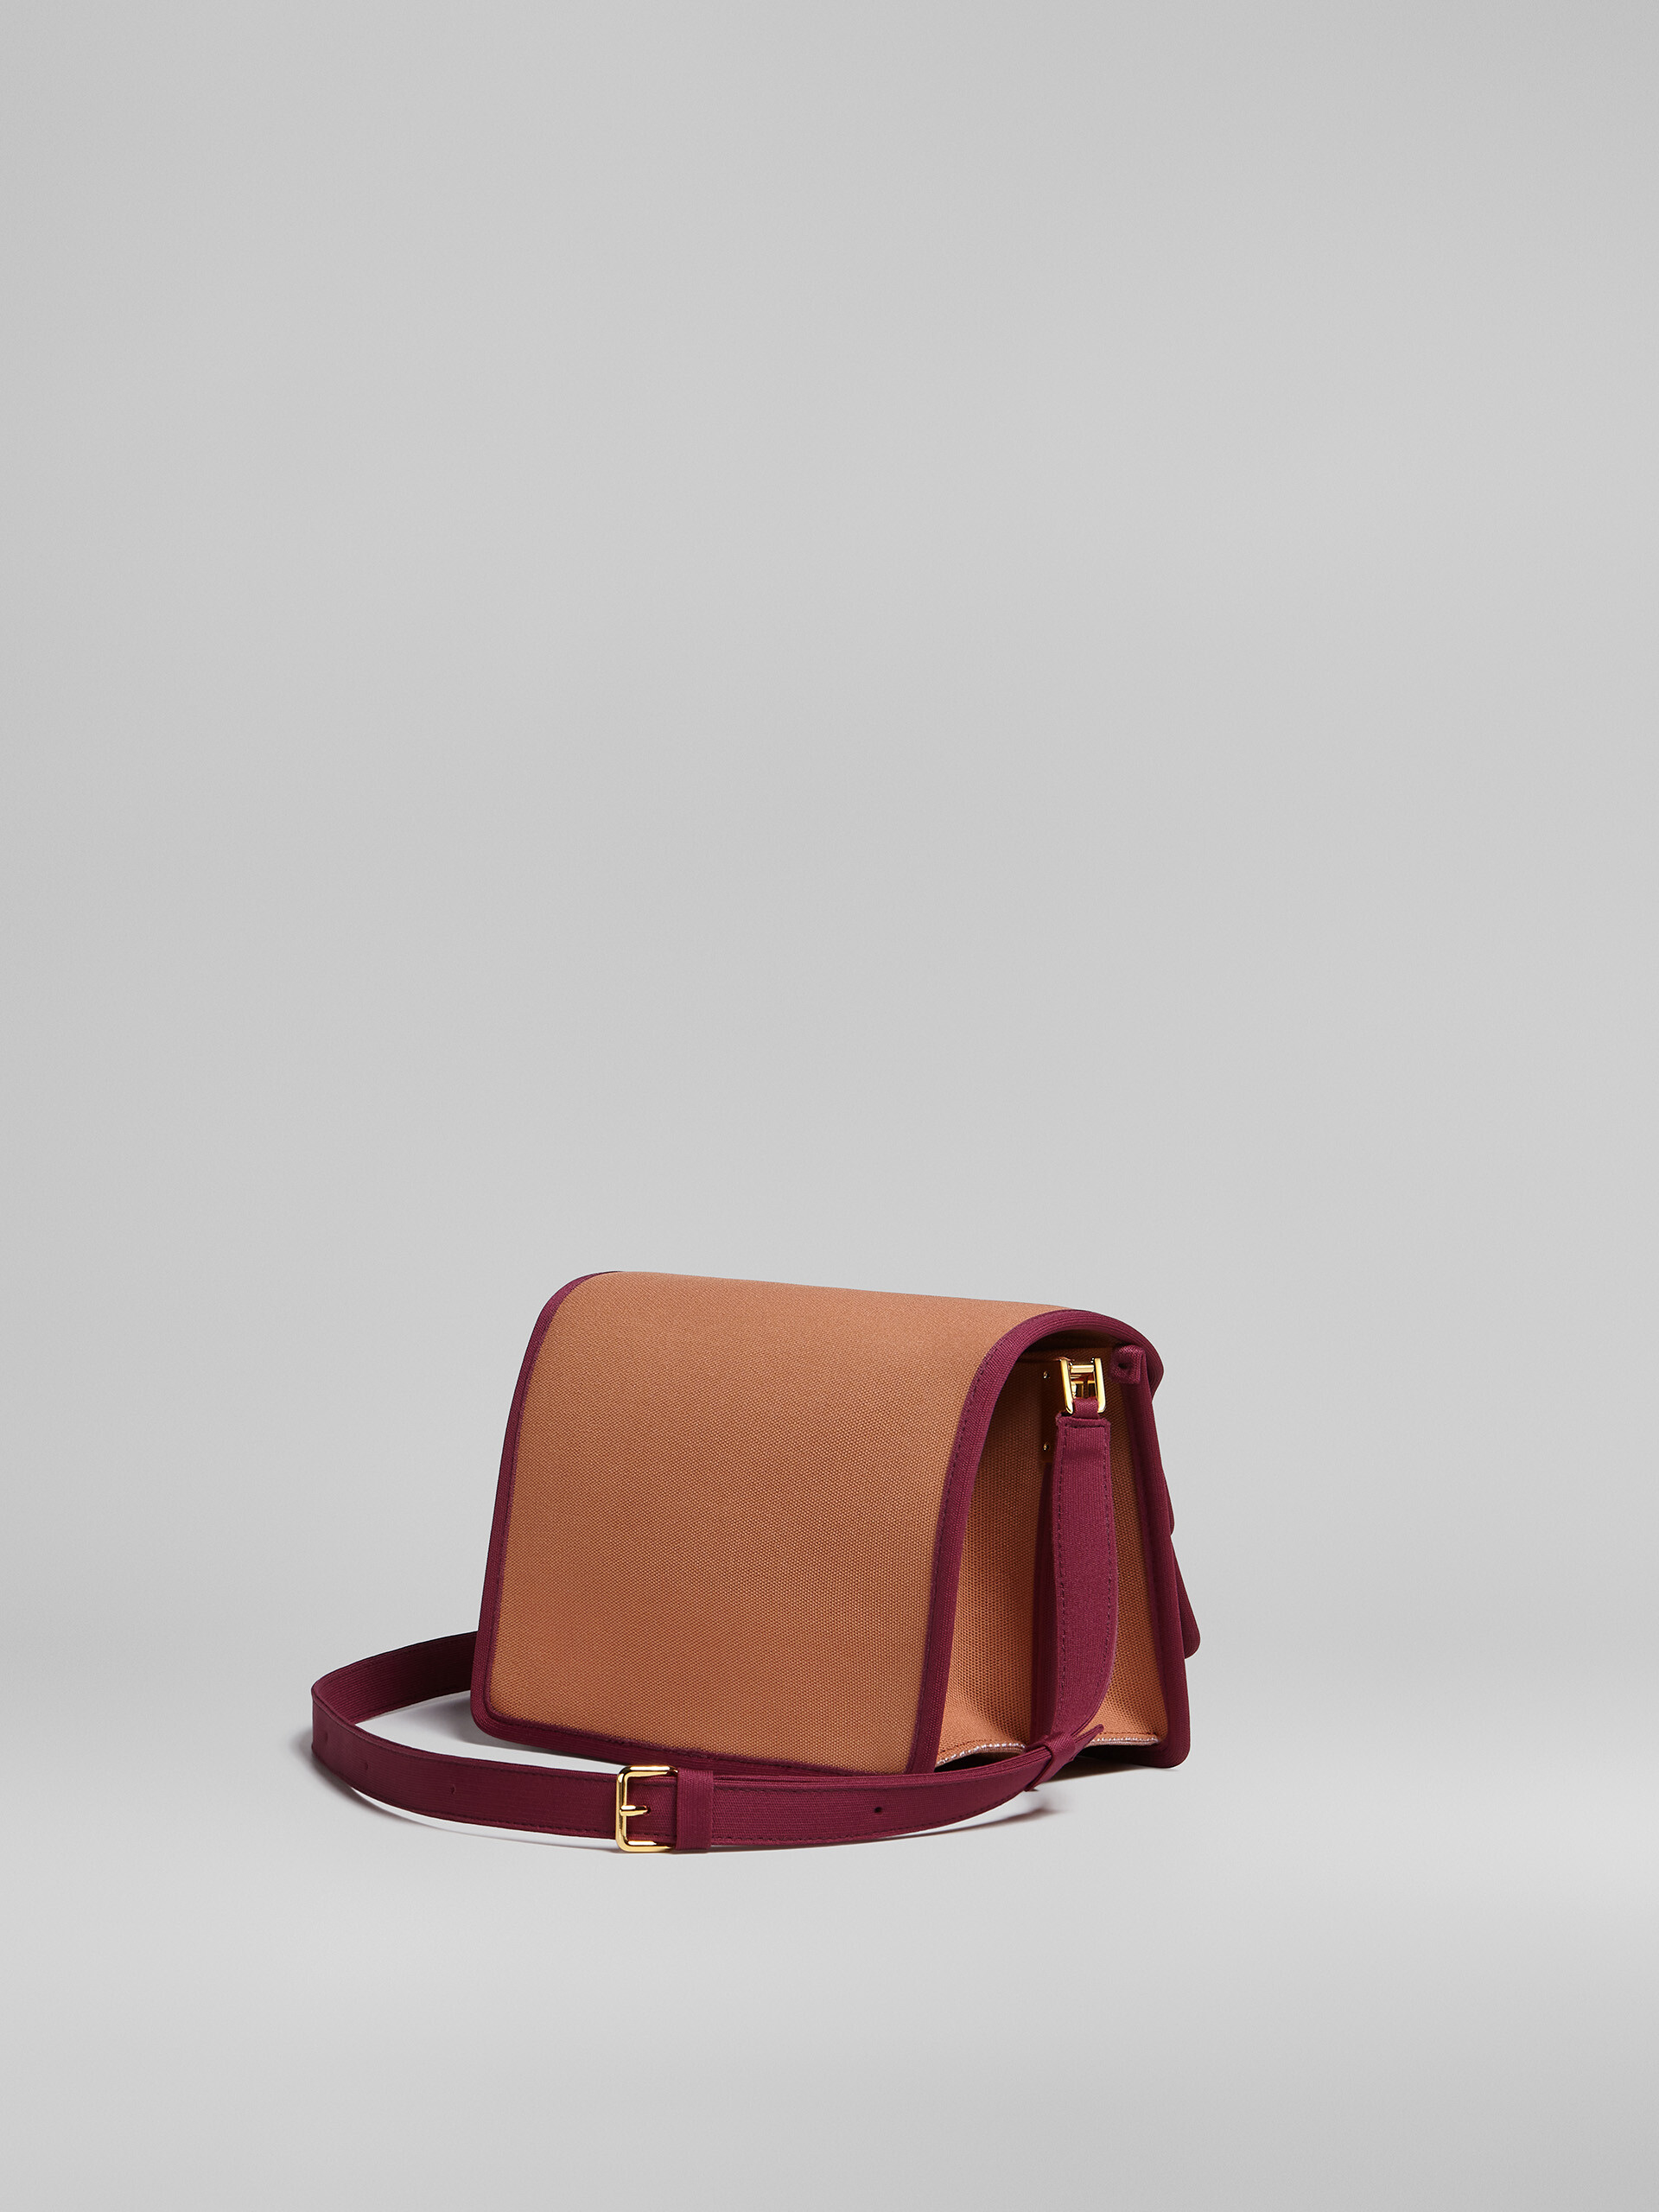 TRUNK SOFT medium bag in brown and purple jacquard - Shoulder Bag - Image 3